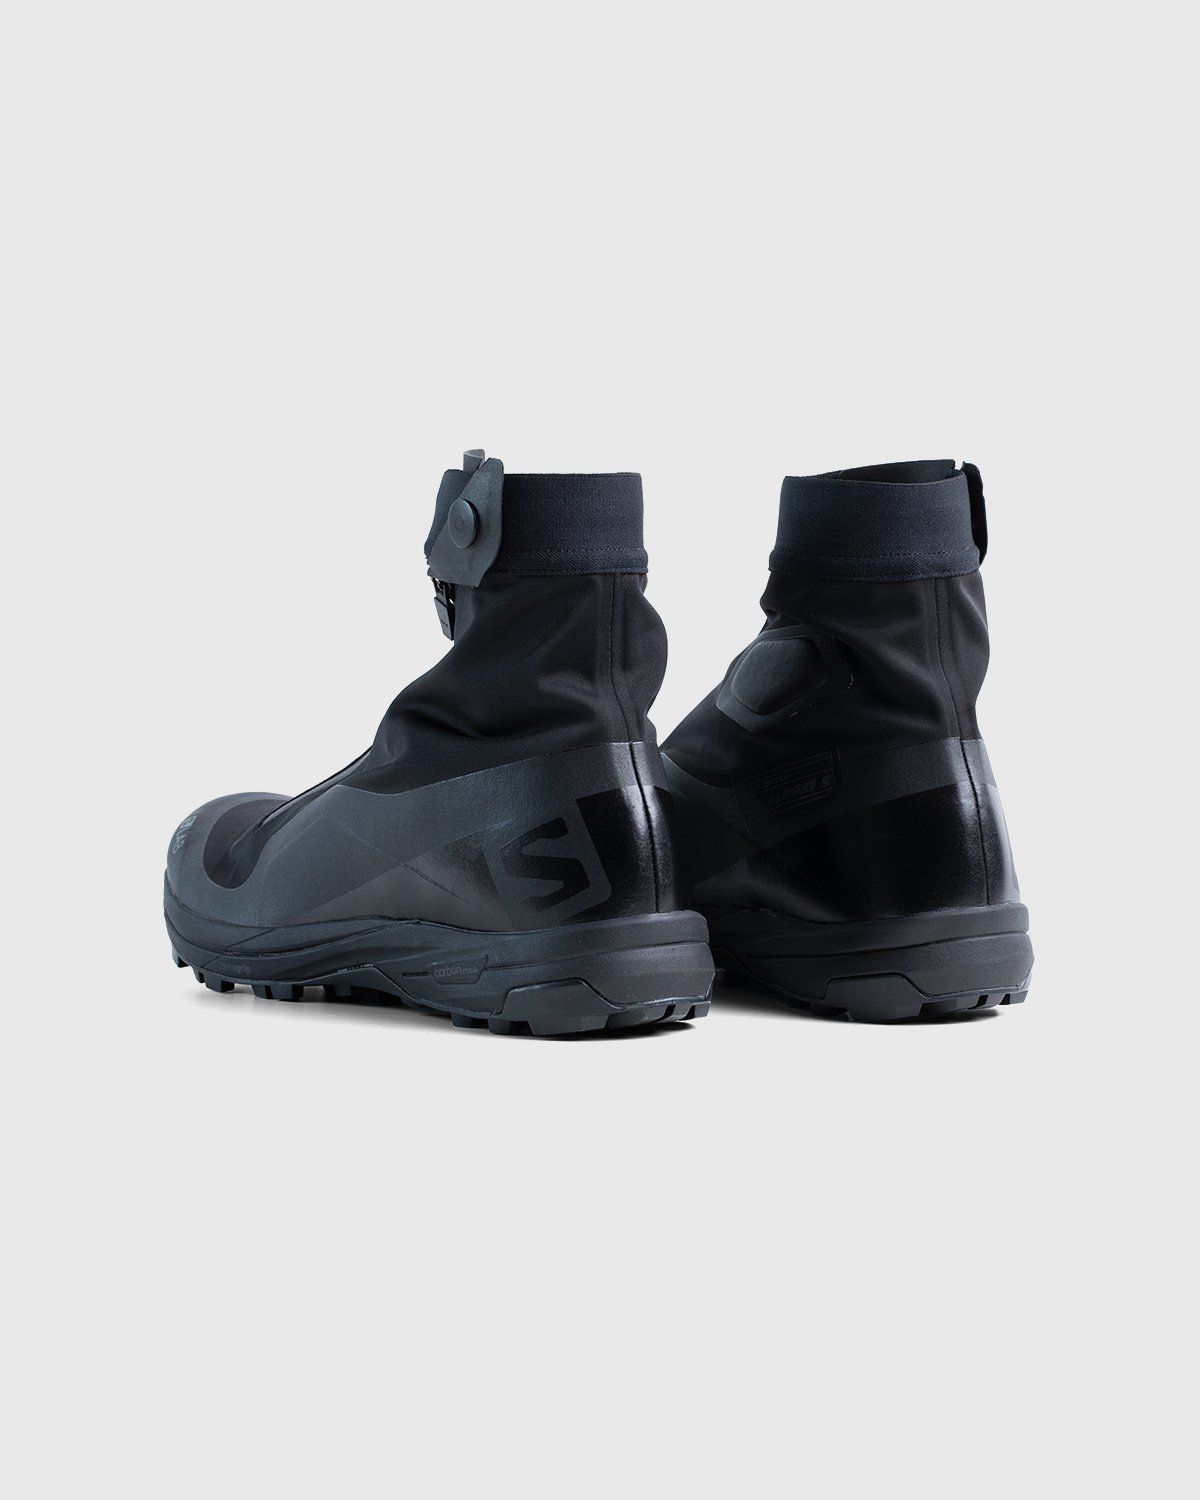 Salomon – S/Lab XA-Alpine 2 Limited Edition Black - Sneakers - Black - Image 3